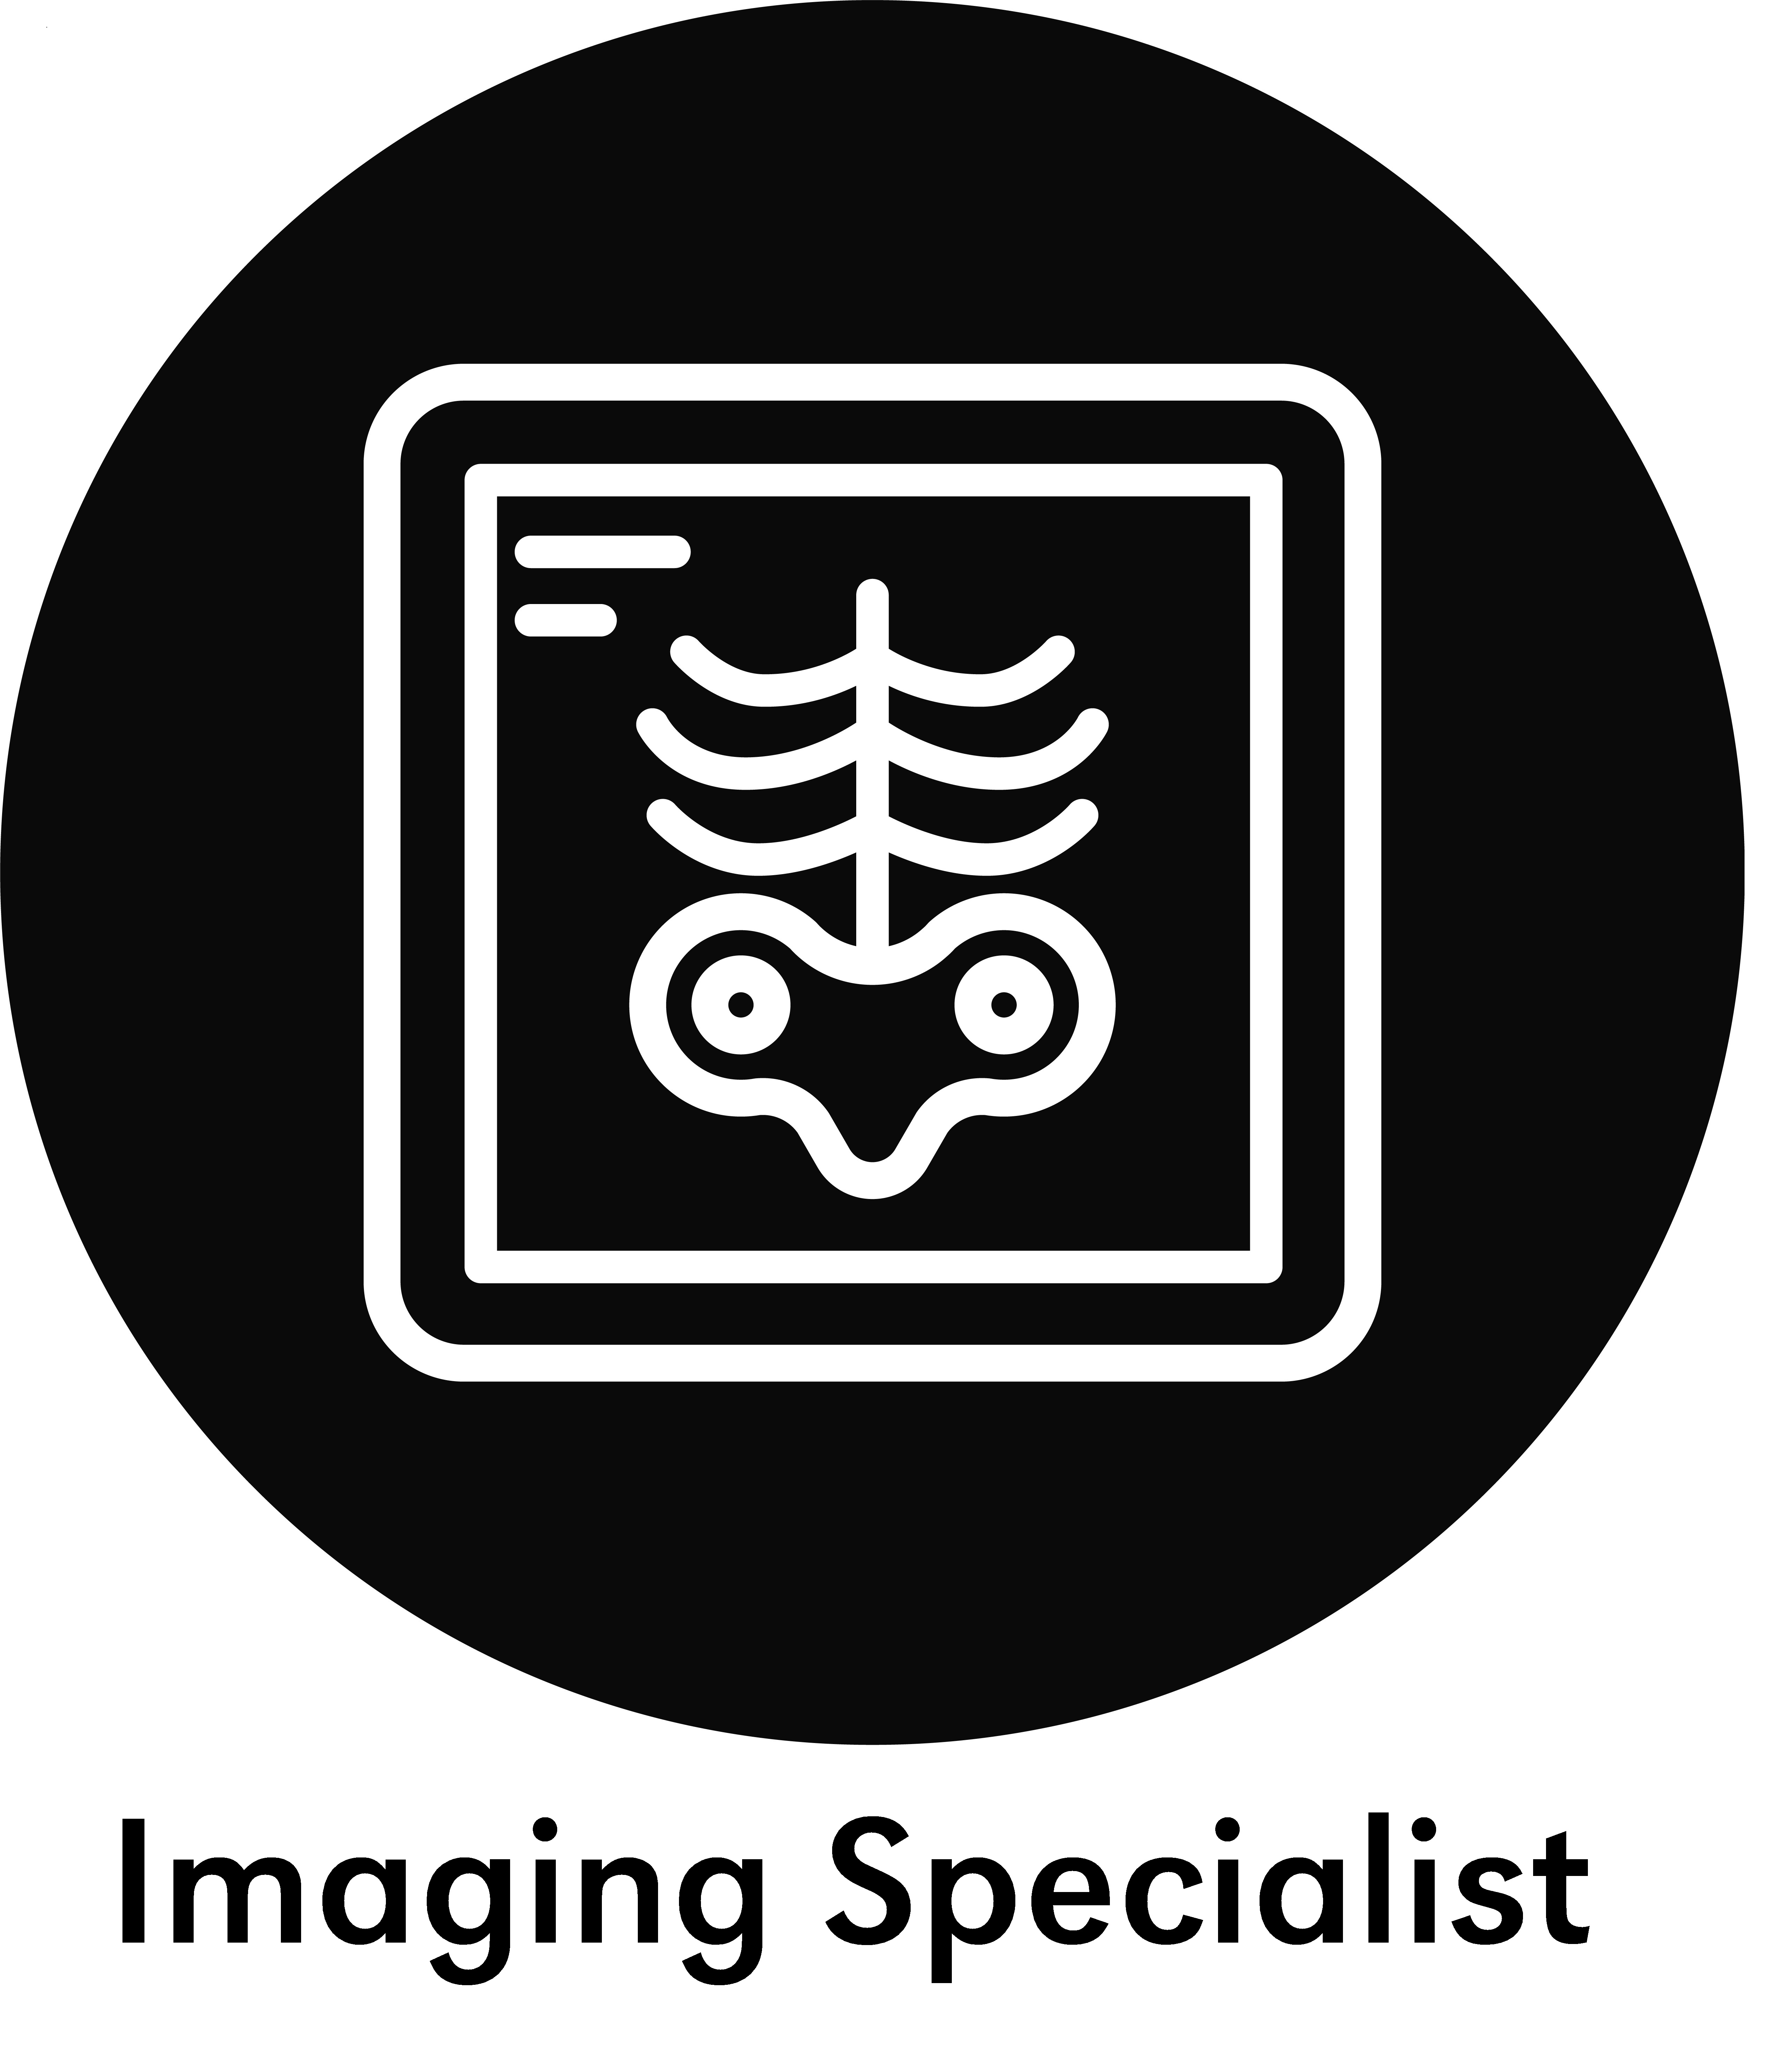 hcrc_imaging-specialist.jpg